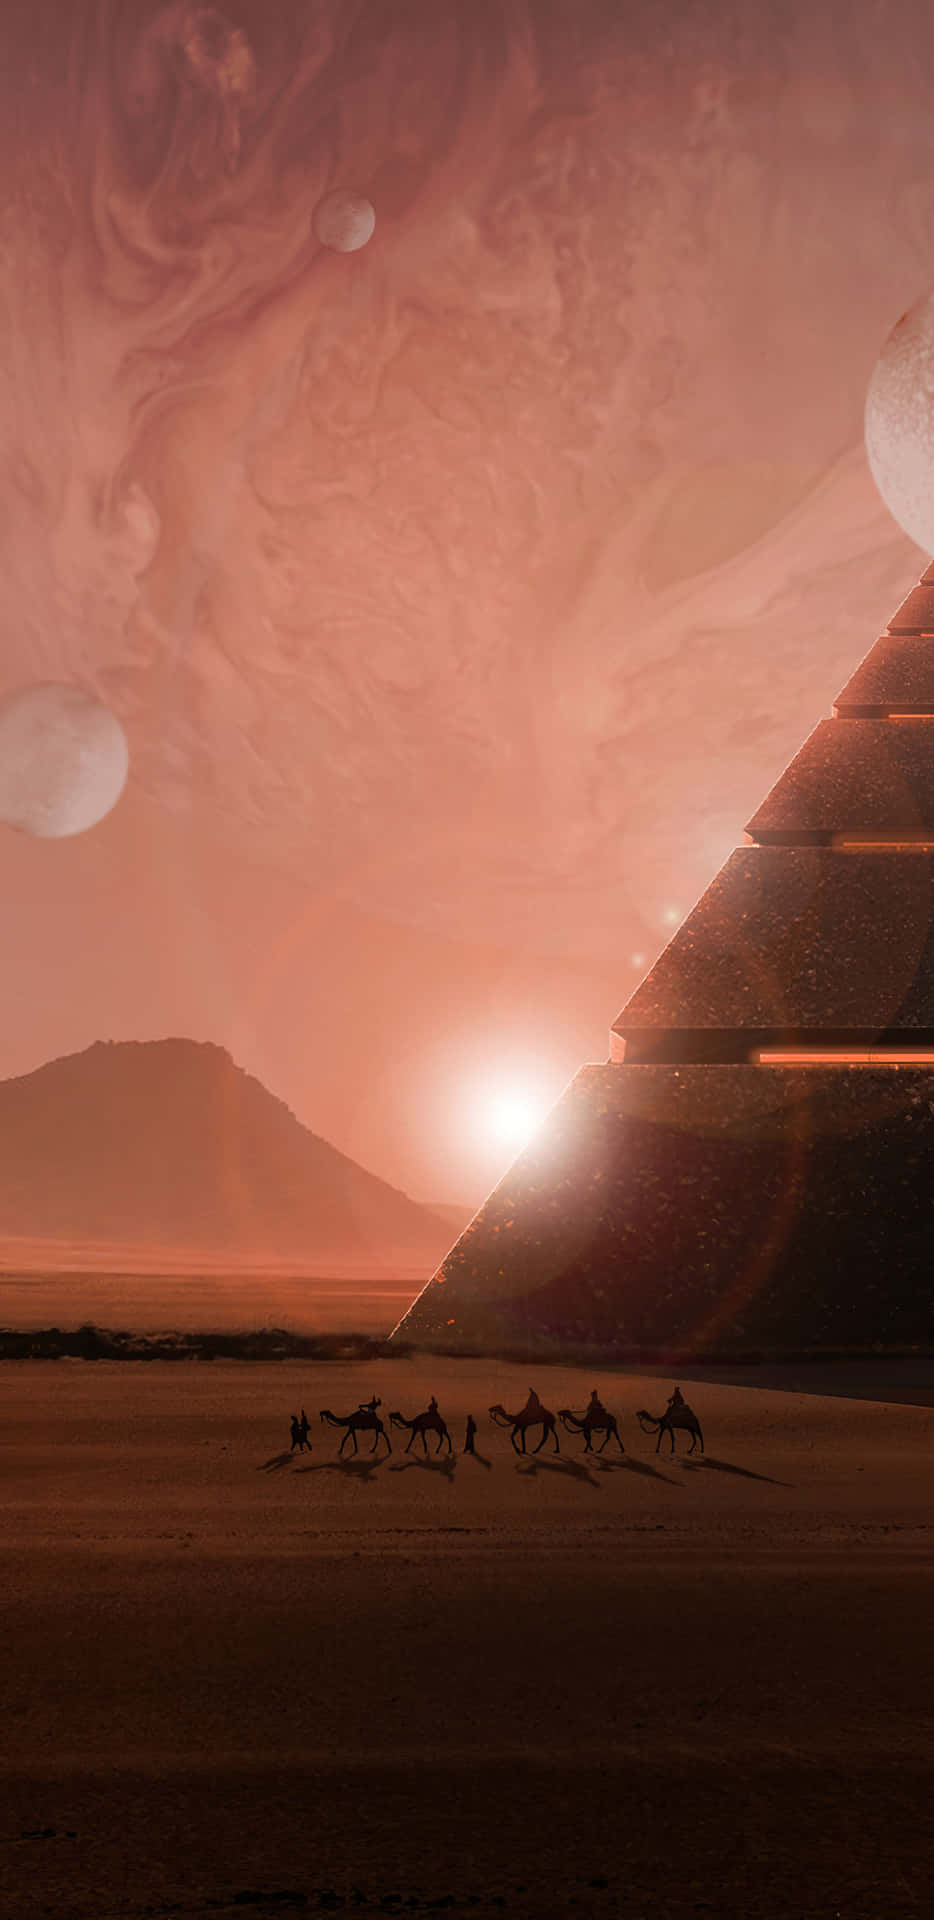 Sci-fi Pyramid Of The Moon Wallpaper